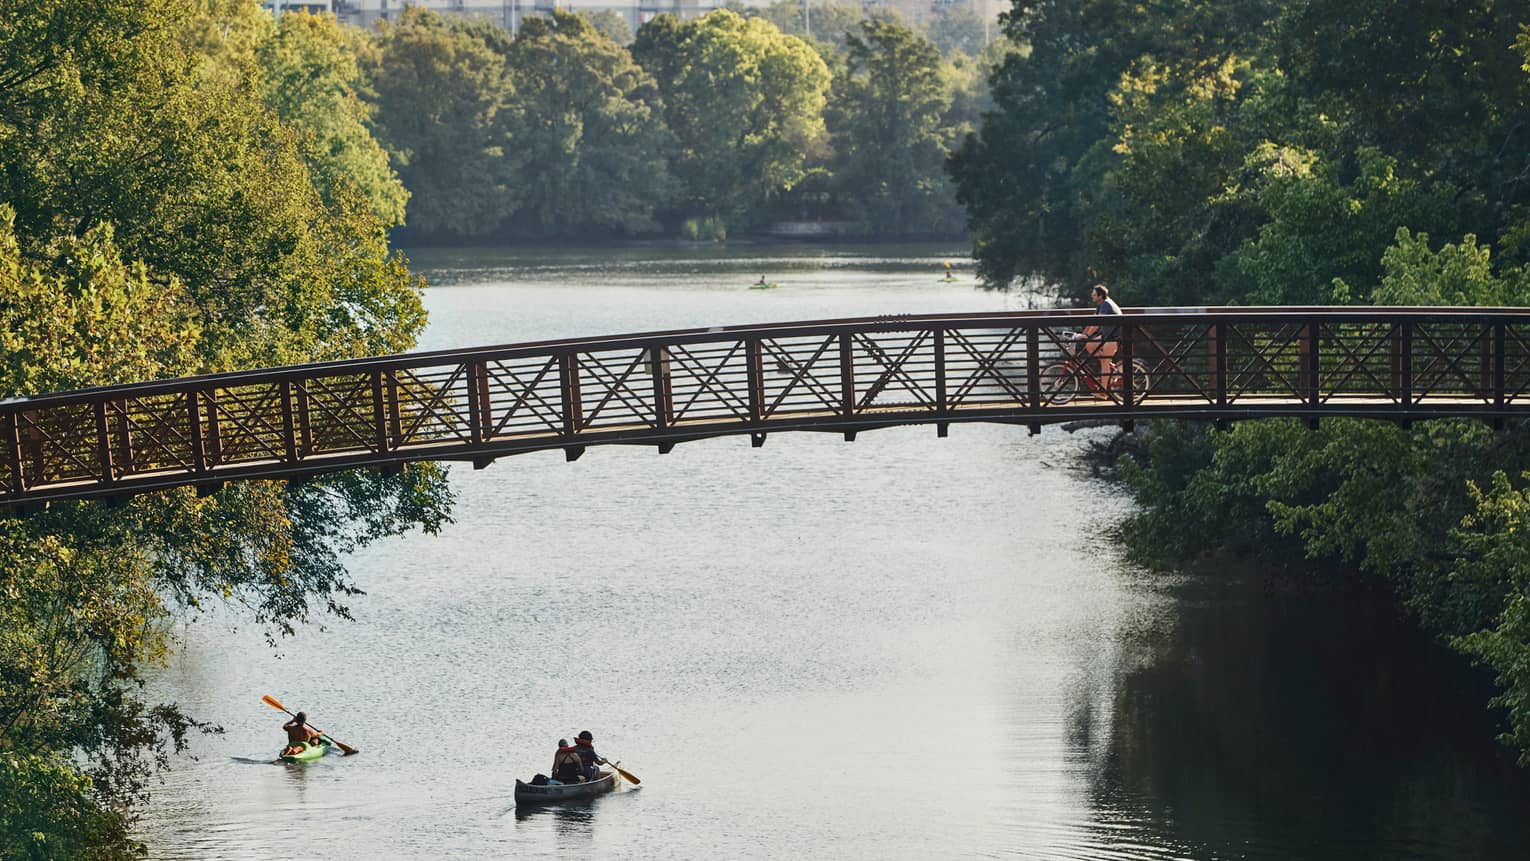 People in kayak, canoe on lake under cyclist on foot bridge